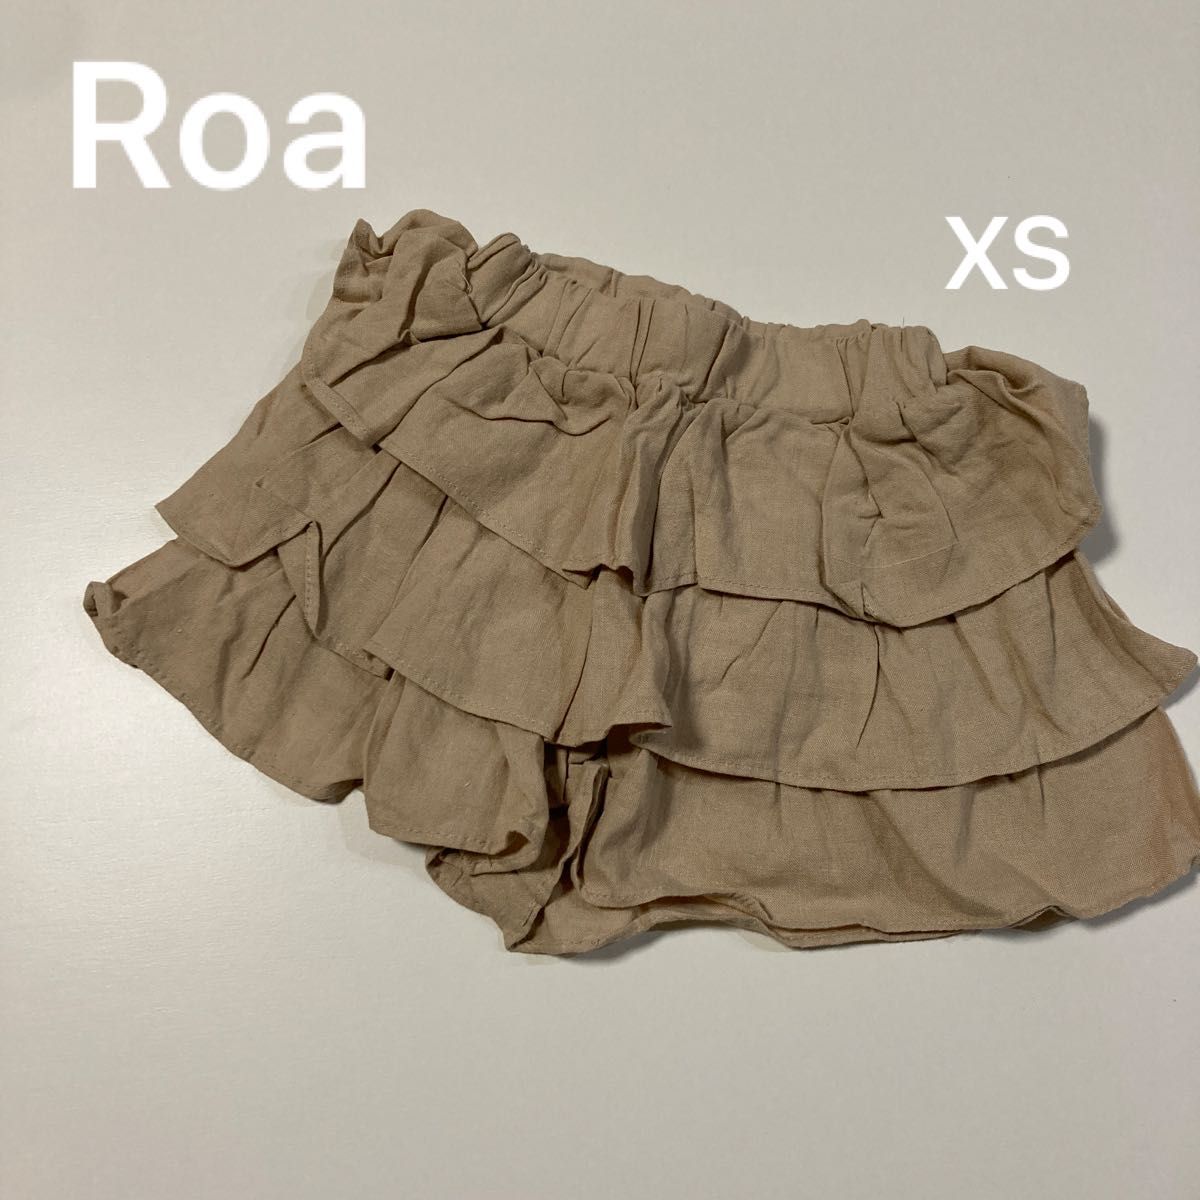 168 Roa スカート スカパン パンツ XS 80相当 ショーパン 子供服 